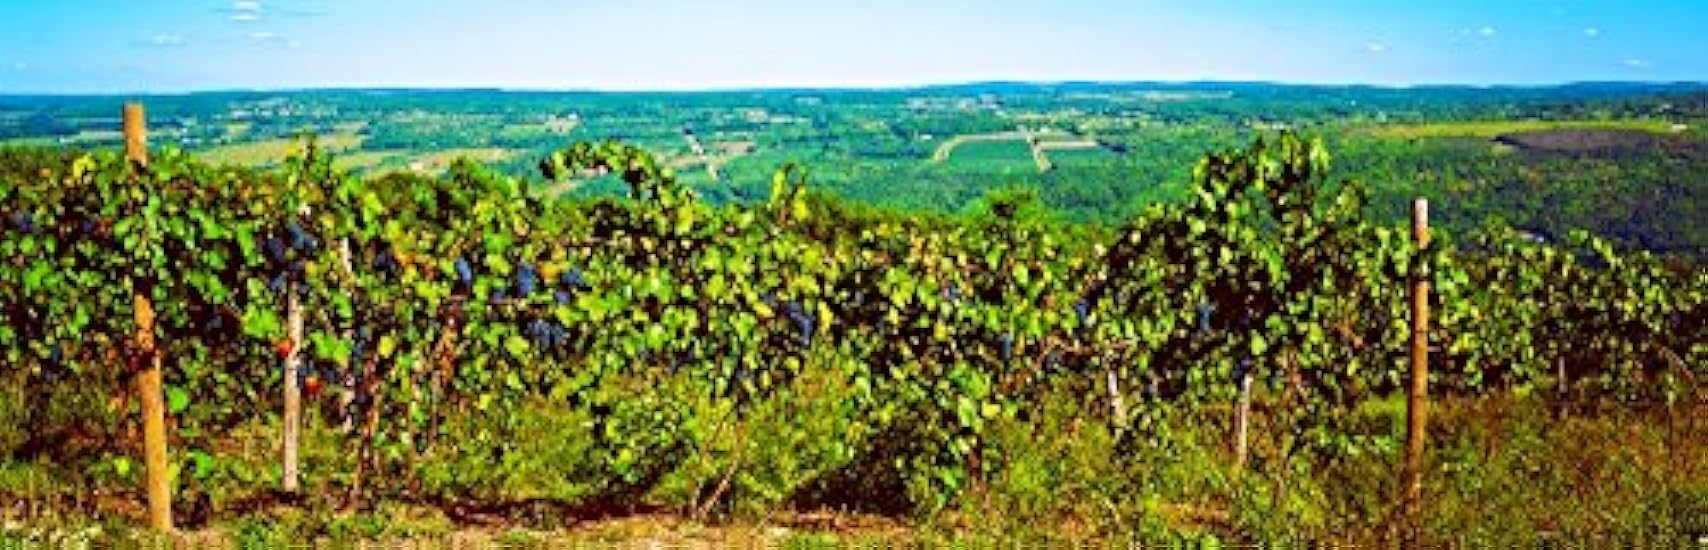 Posterazzi PPI54816LARGE Grape vineyards in Finger Lake Region New York State USA Poster Print, 12 x 36 712251790